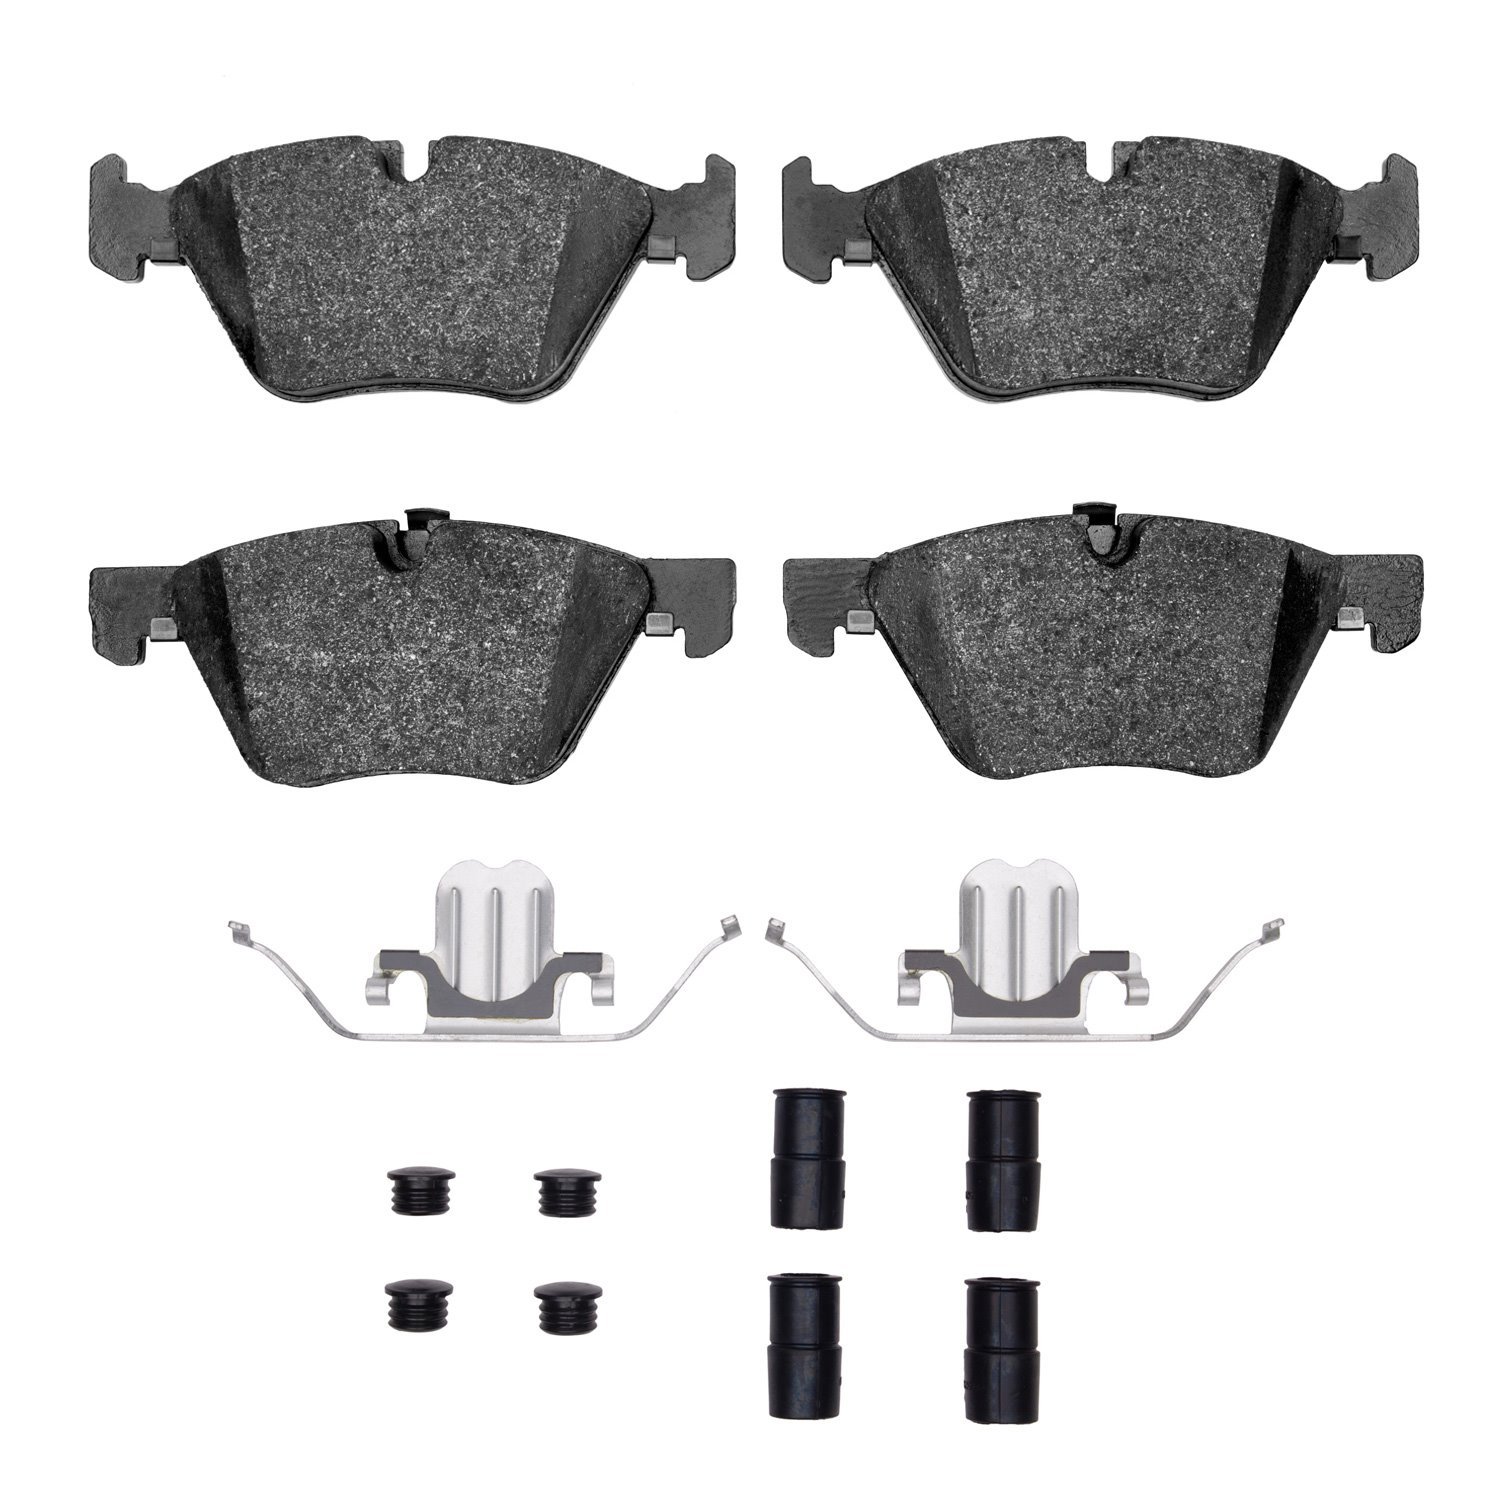 1310-1061-01 3000-Series Ceramic Brake Pads & Hardware Kit, Fits Select BMW, Position: Front